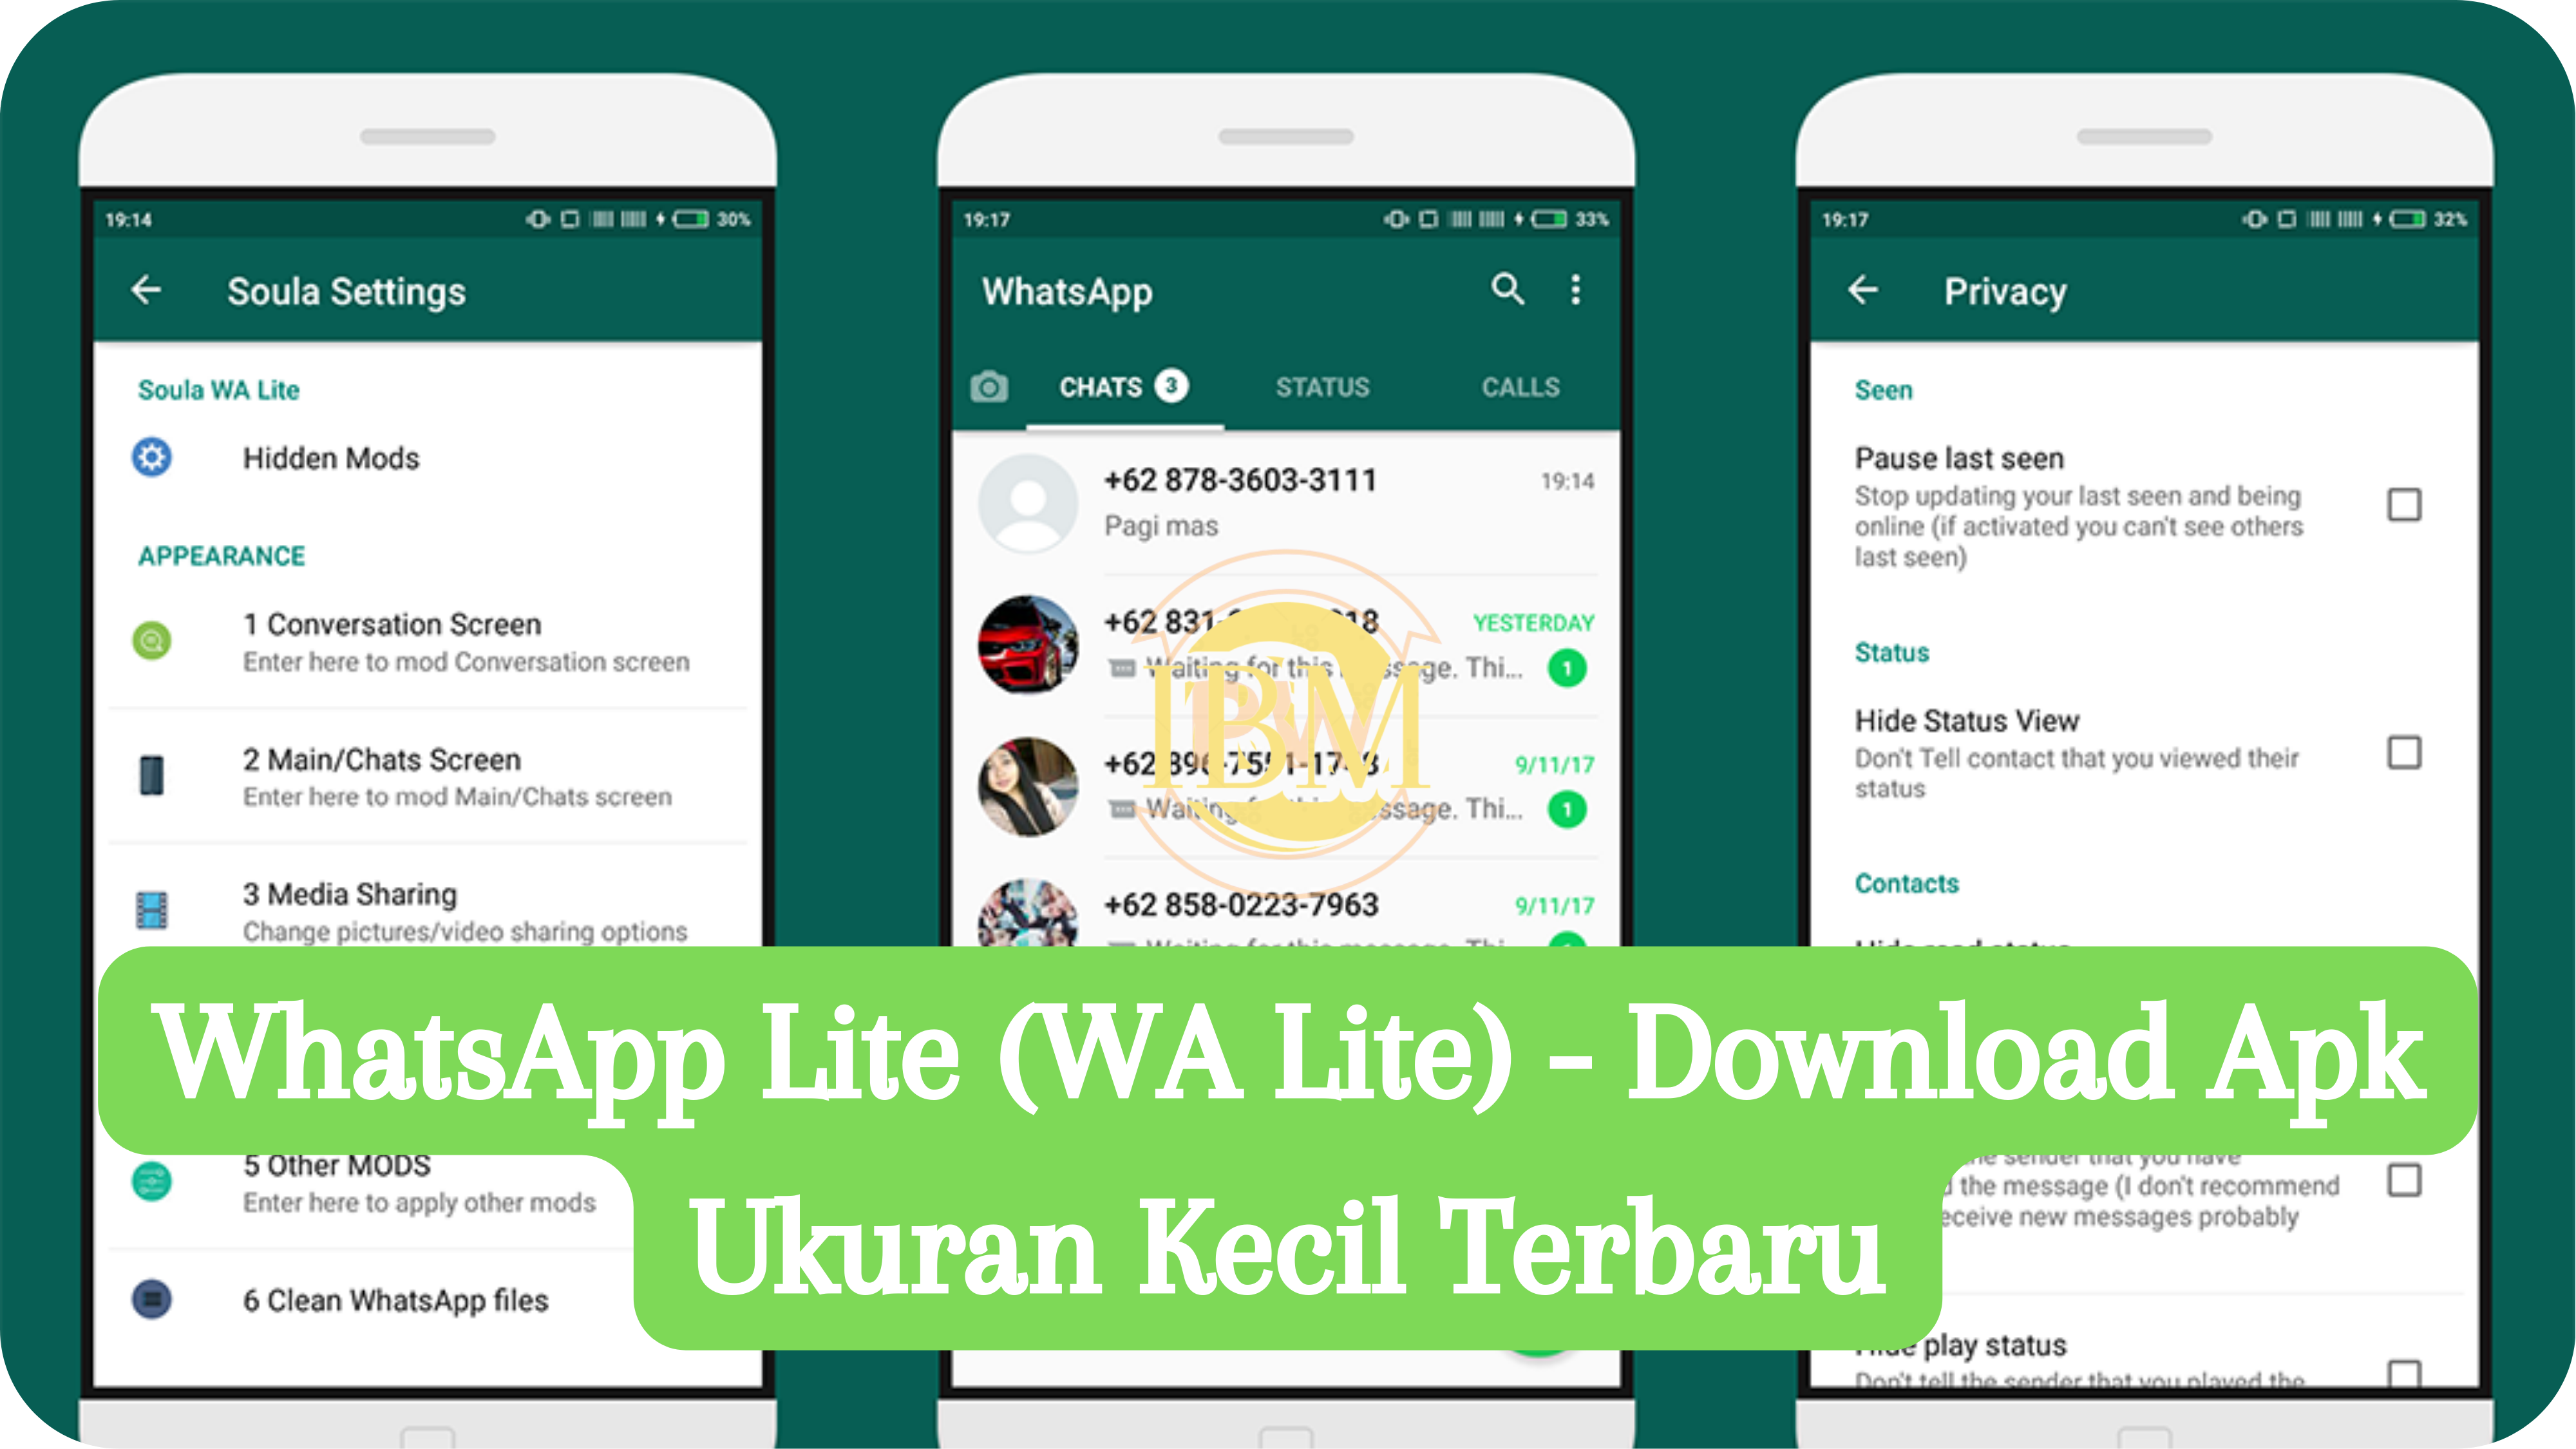 WhatsApp Lite (WA Lite) - Download Apk Ukuran Kecil Terbaru